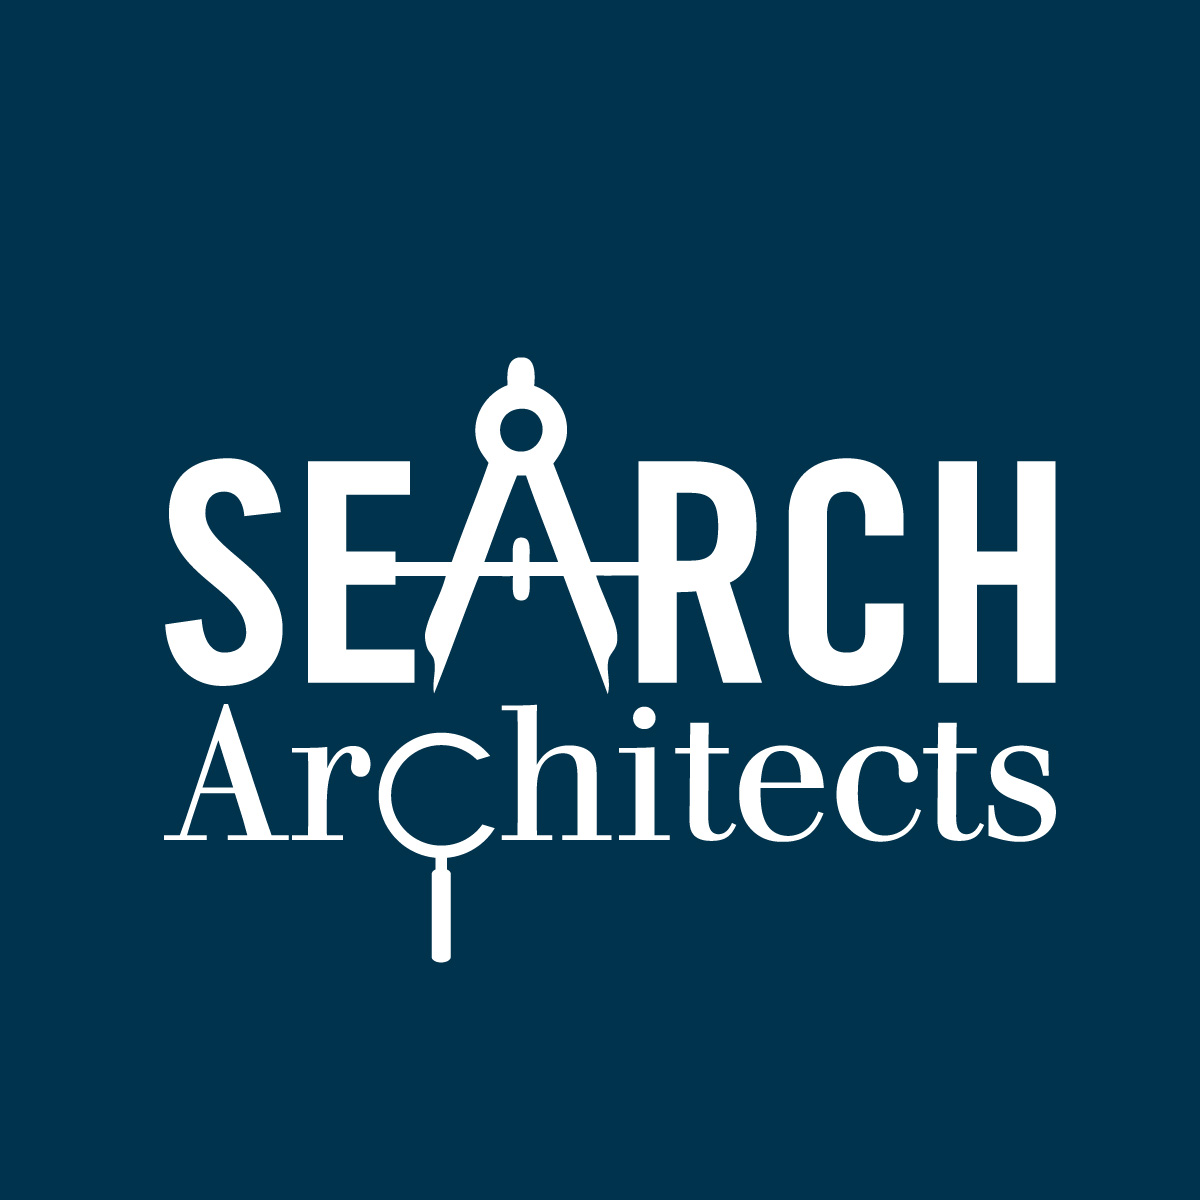 search architects wordmark logo